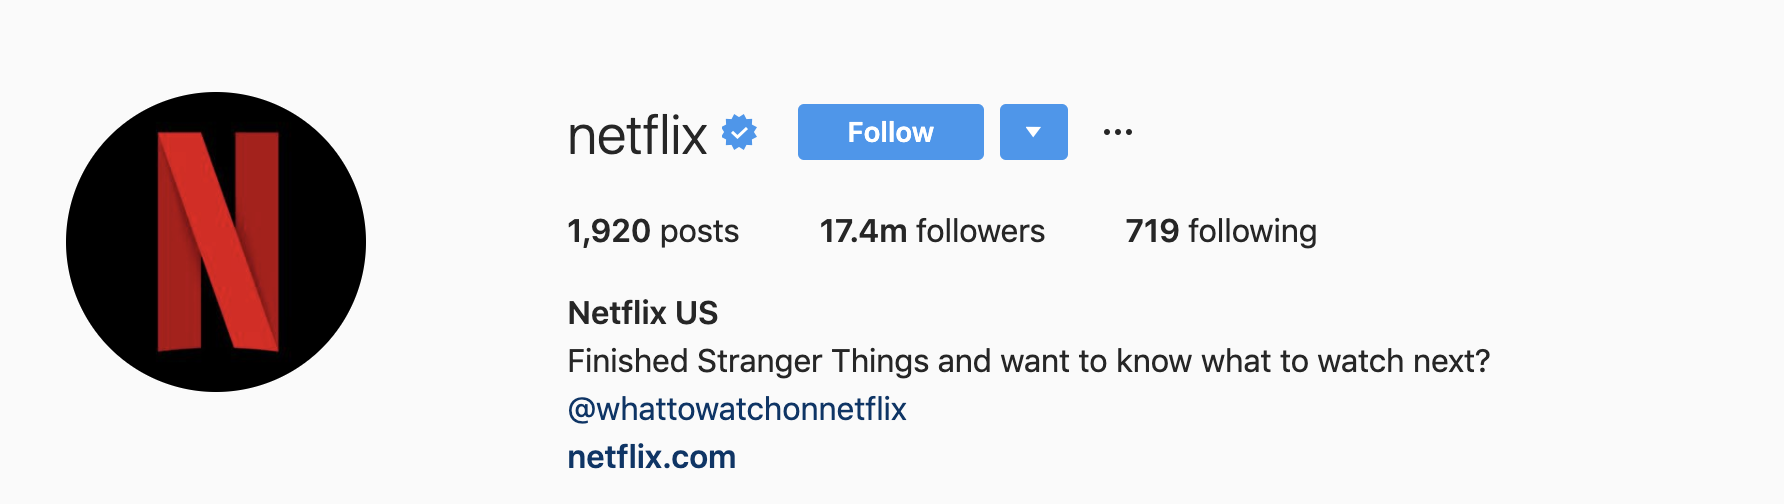 Netflix verified on Instagram